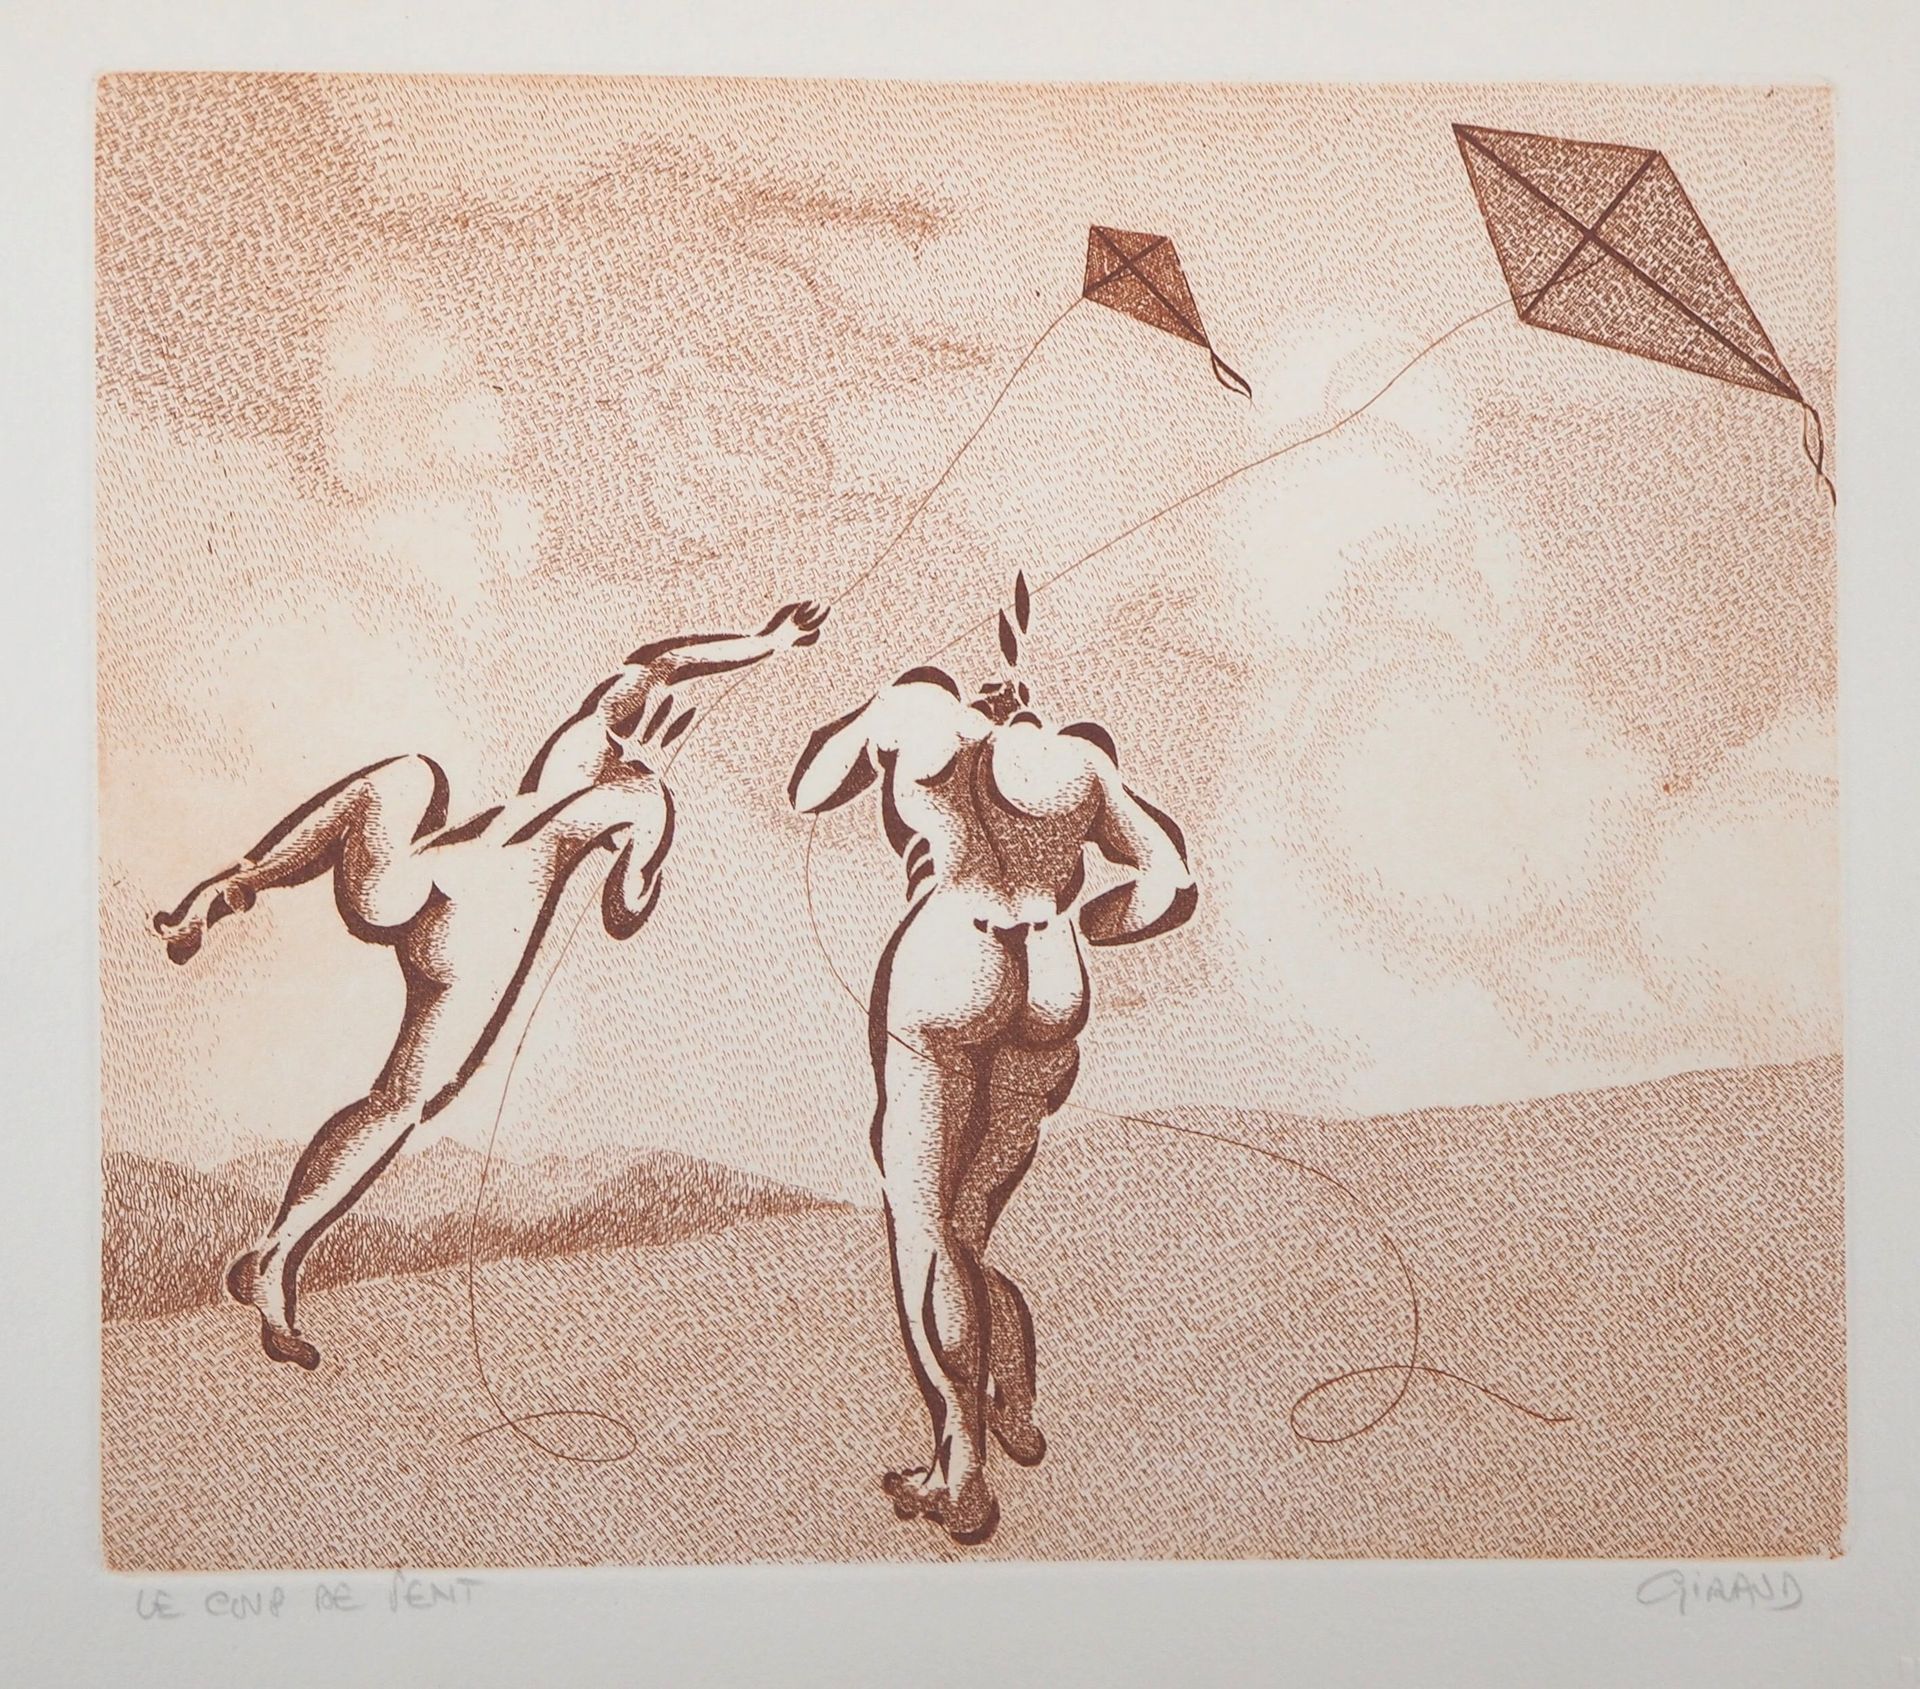 Jean Giraud Jean Giraud

风吹草动，风筝

原始蚀刻画

铅笔签名的艺术家

在BFK Rives牛皮纸上，23.5 x 30厘米

右&hellip;